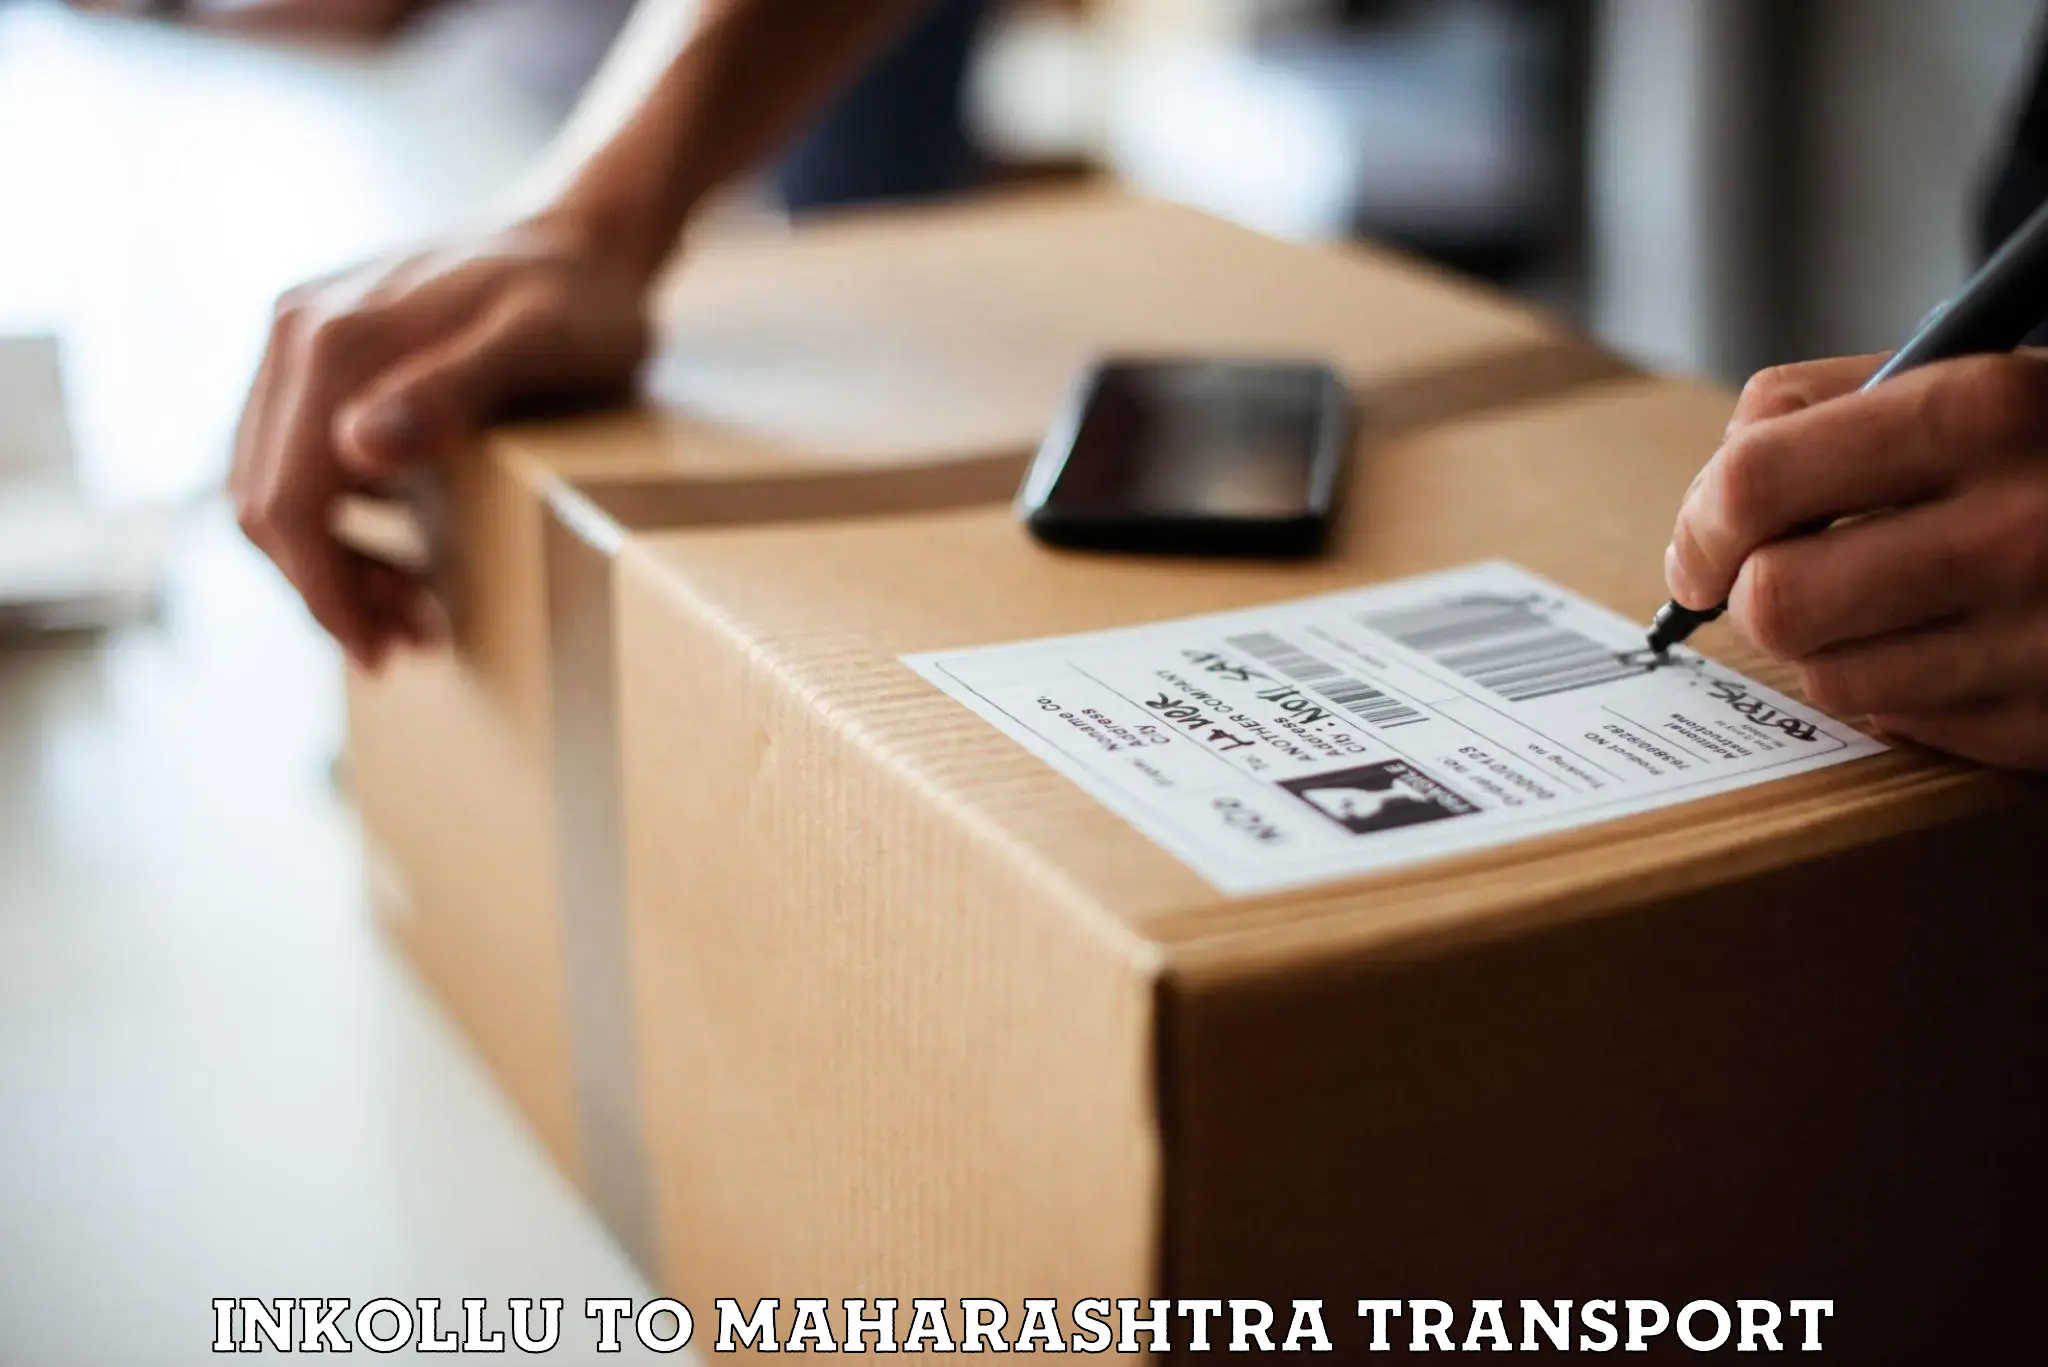 Bike transport service Inkollu to Maharashtra